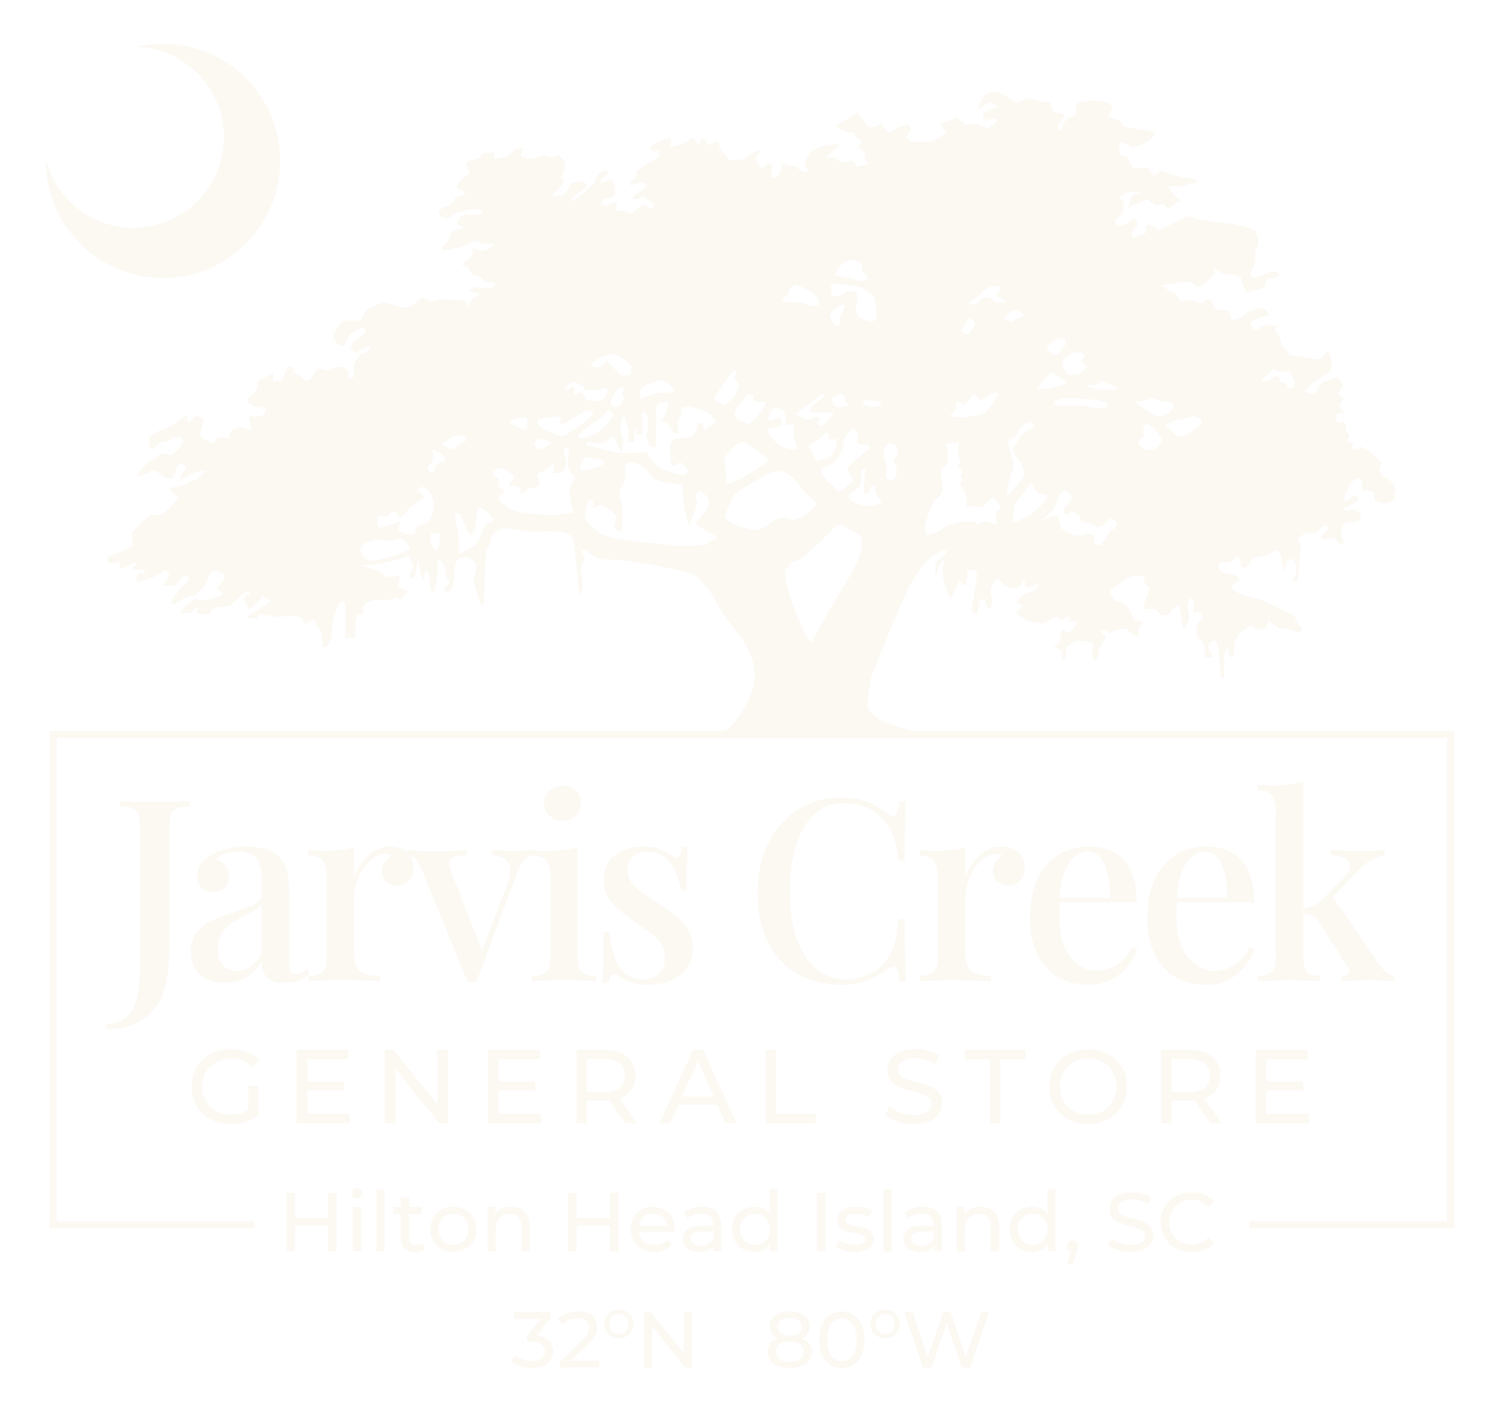 Jarvis Creek General Store